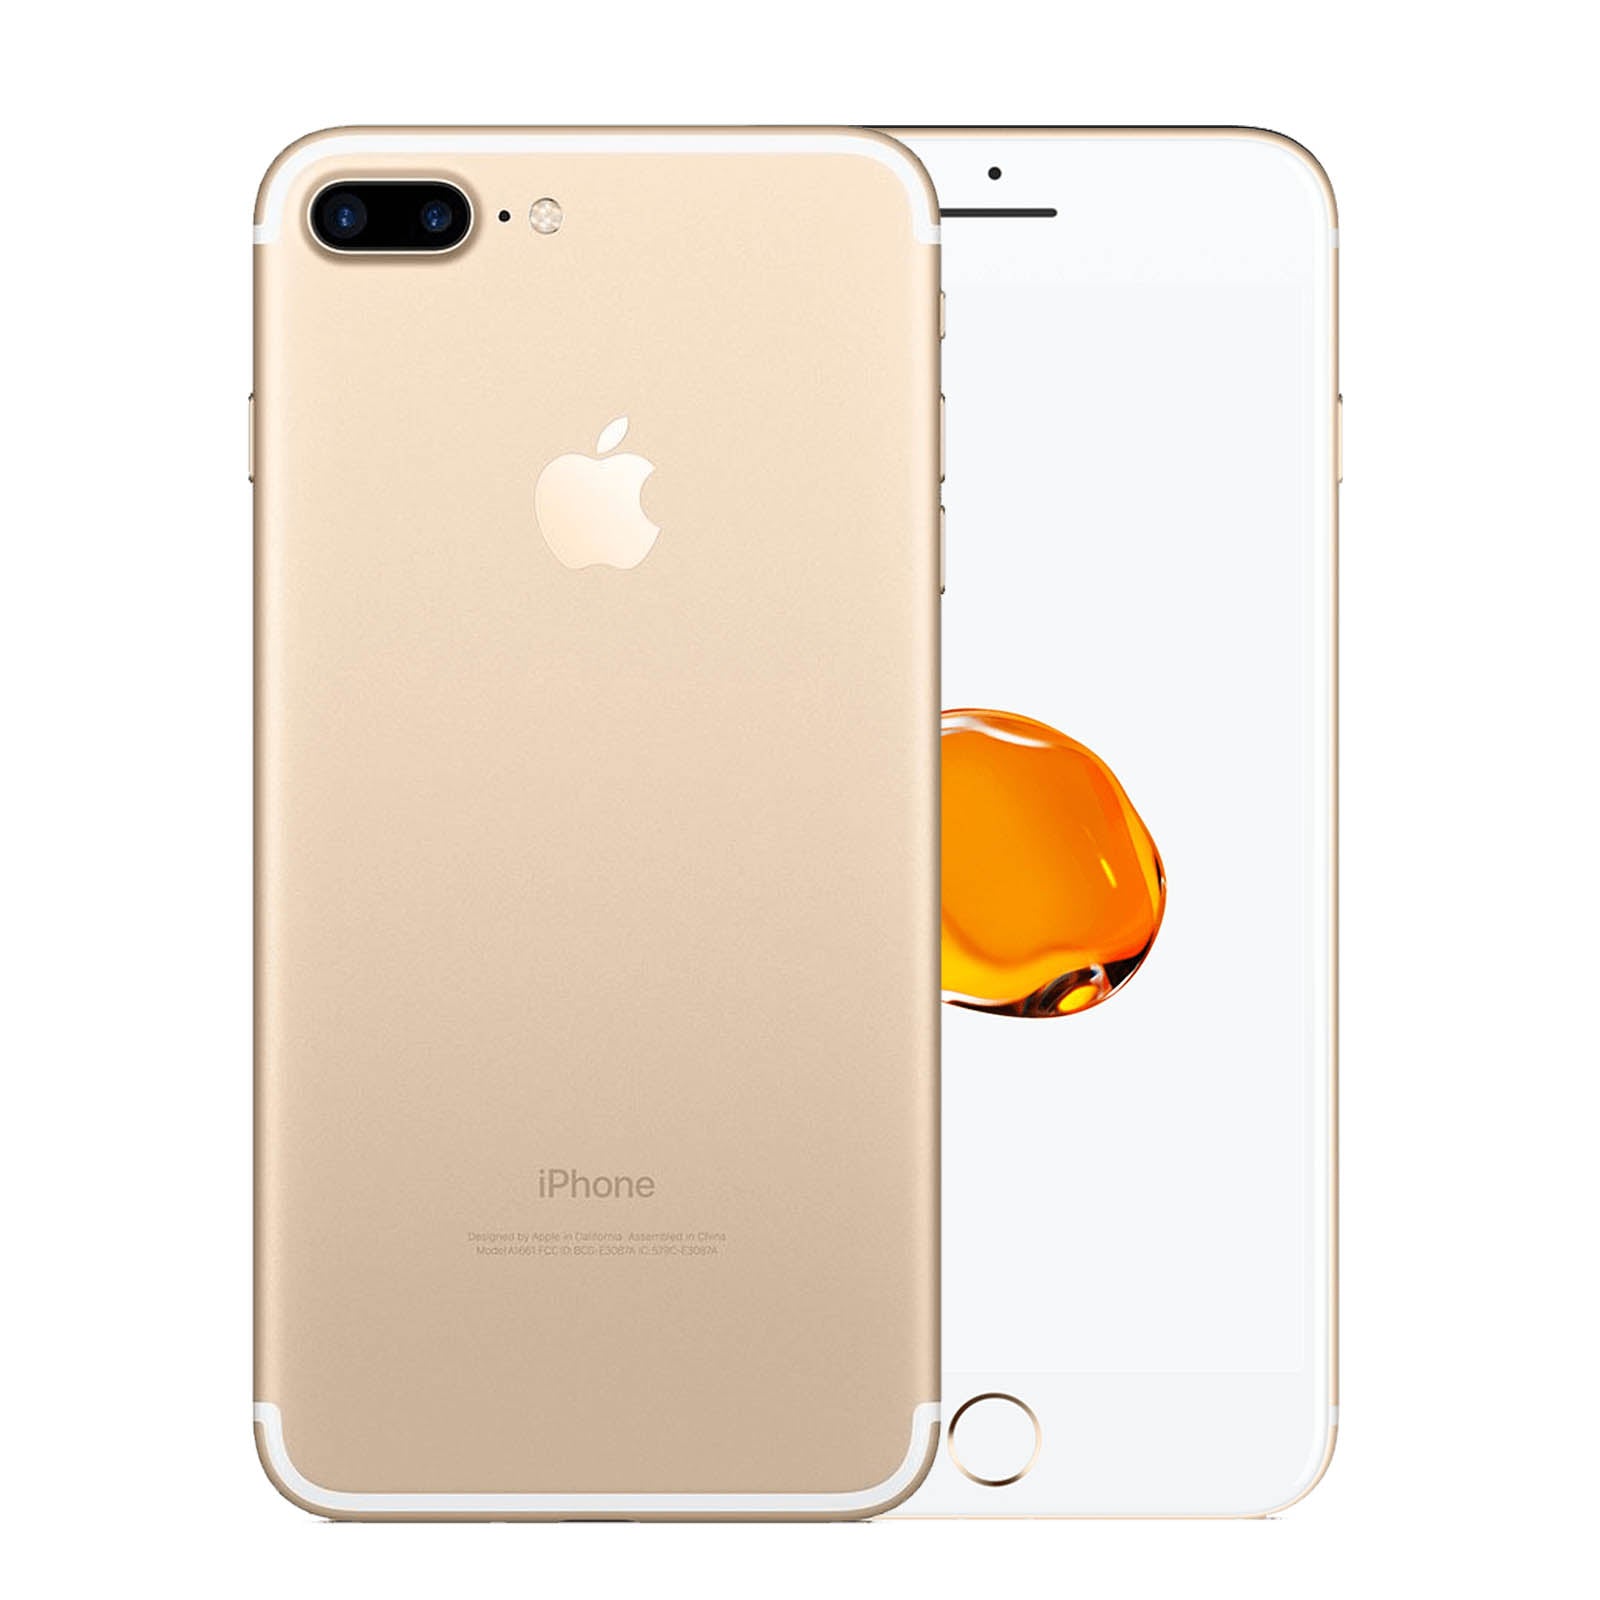 Apple iPhone 7 Plus 256GB Gold Good - Unlocked